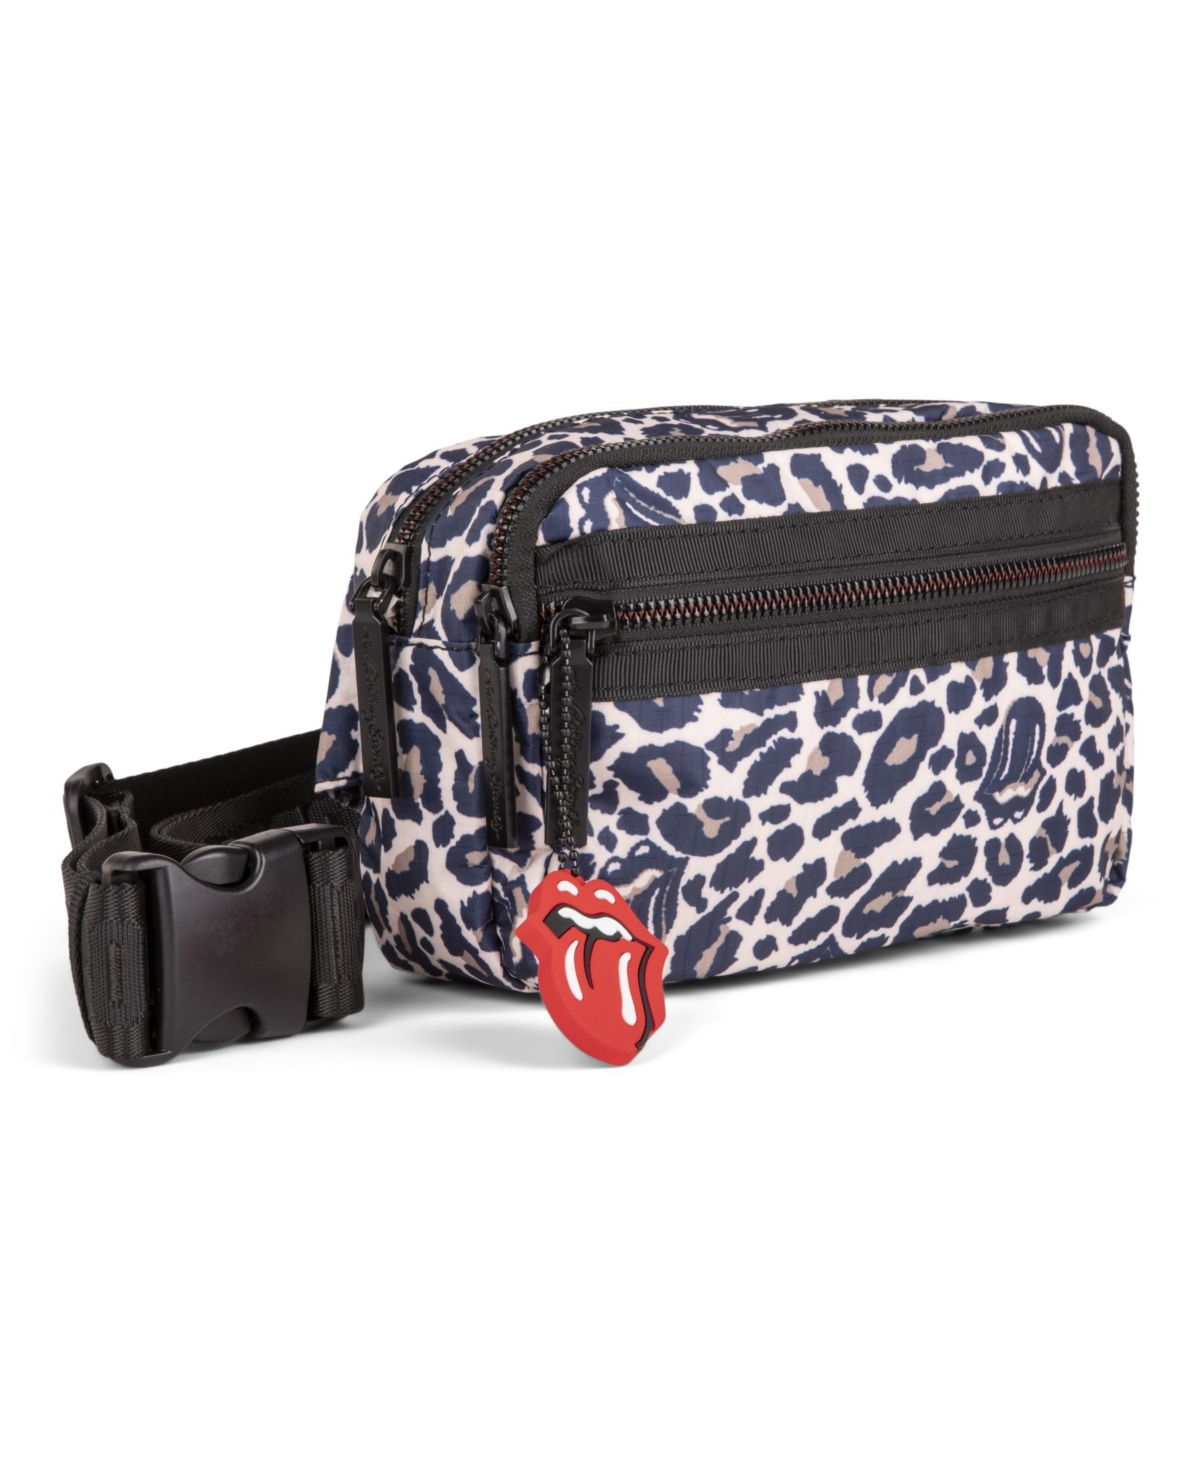 Evolution Collection Waist Bag with Adjustable Strap Buckle - Cheetah Print